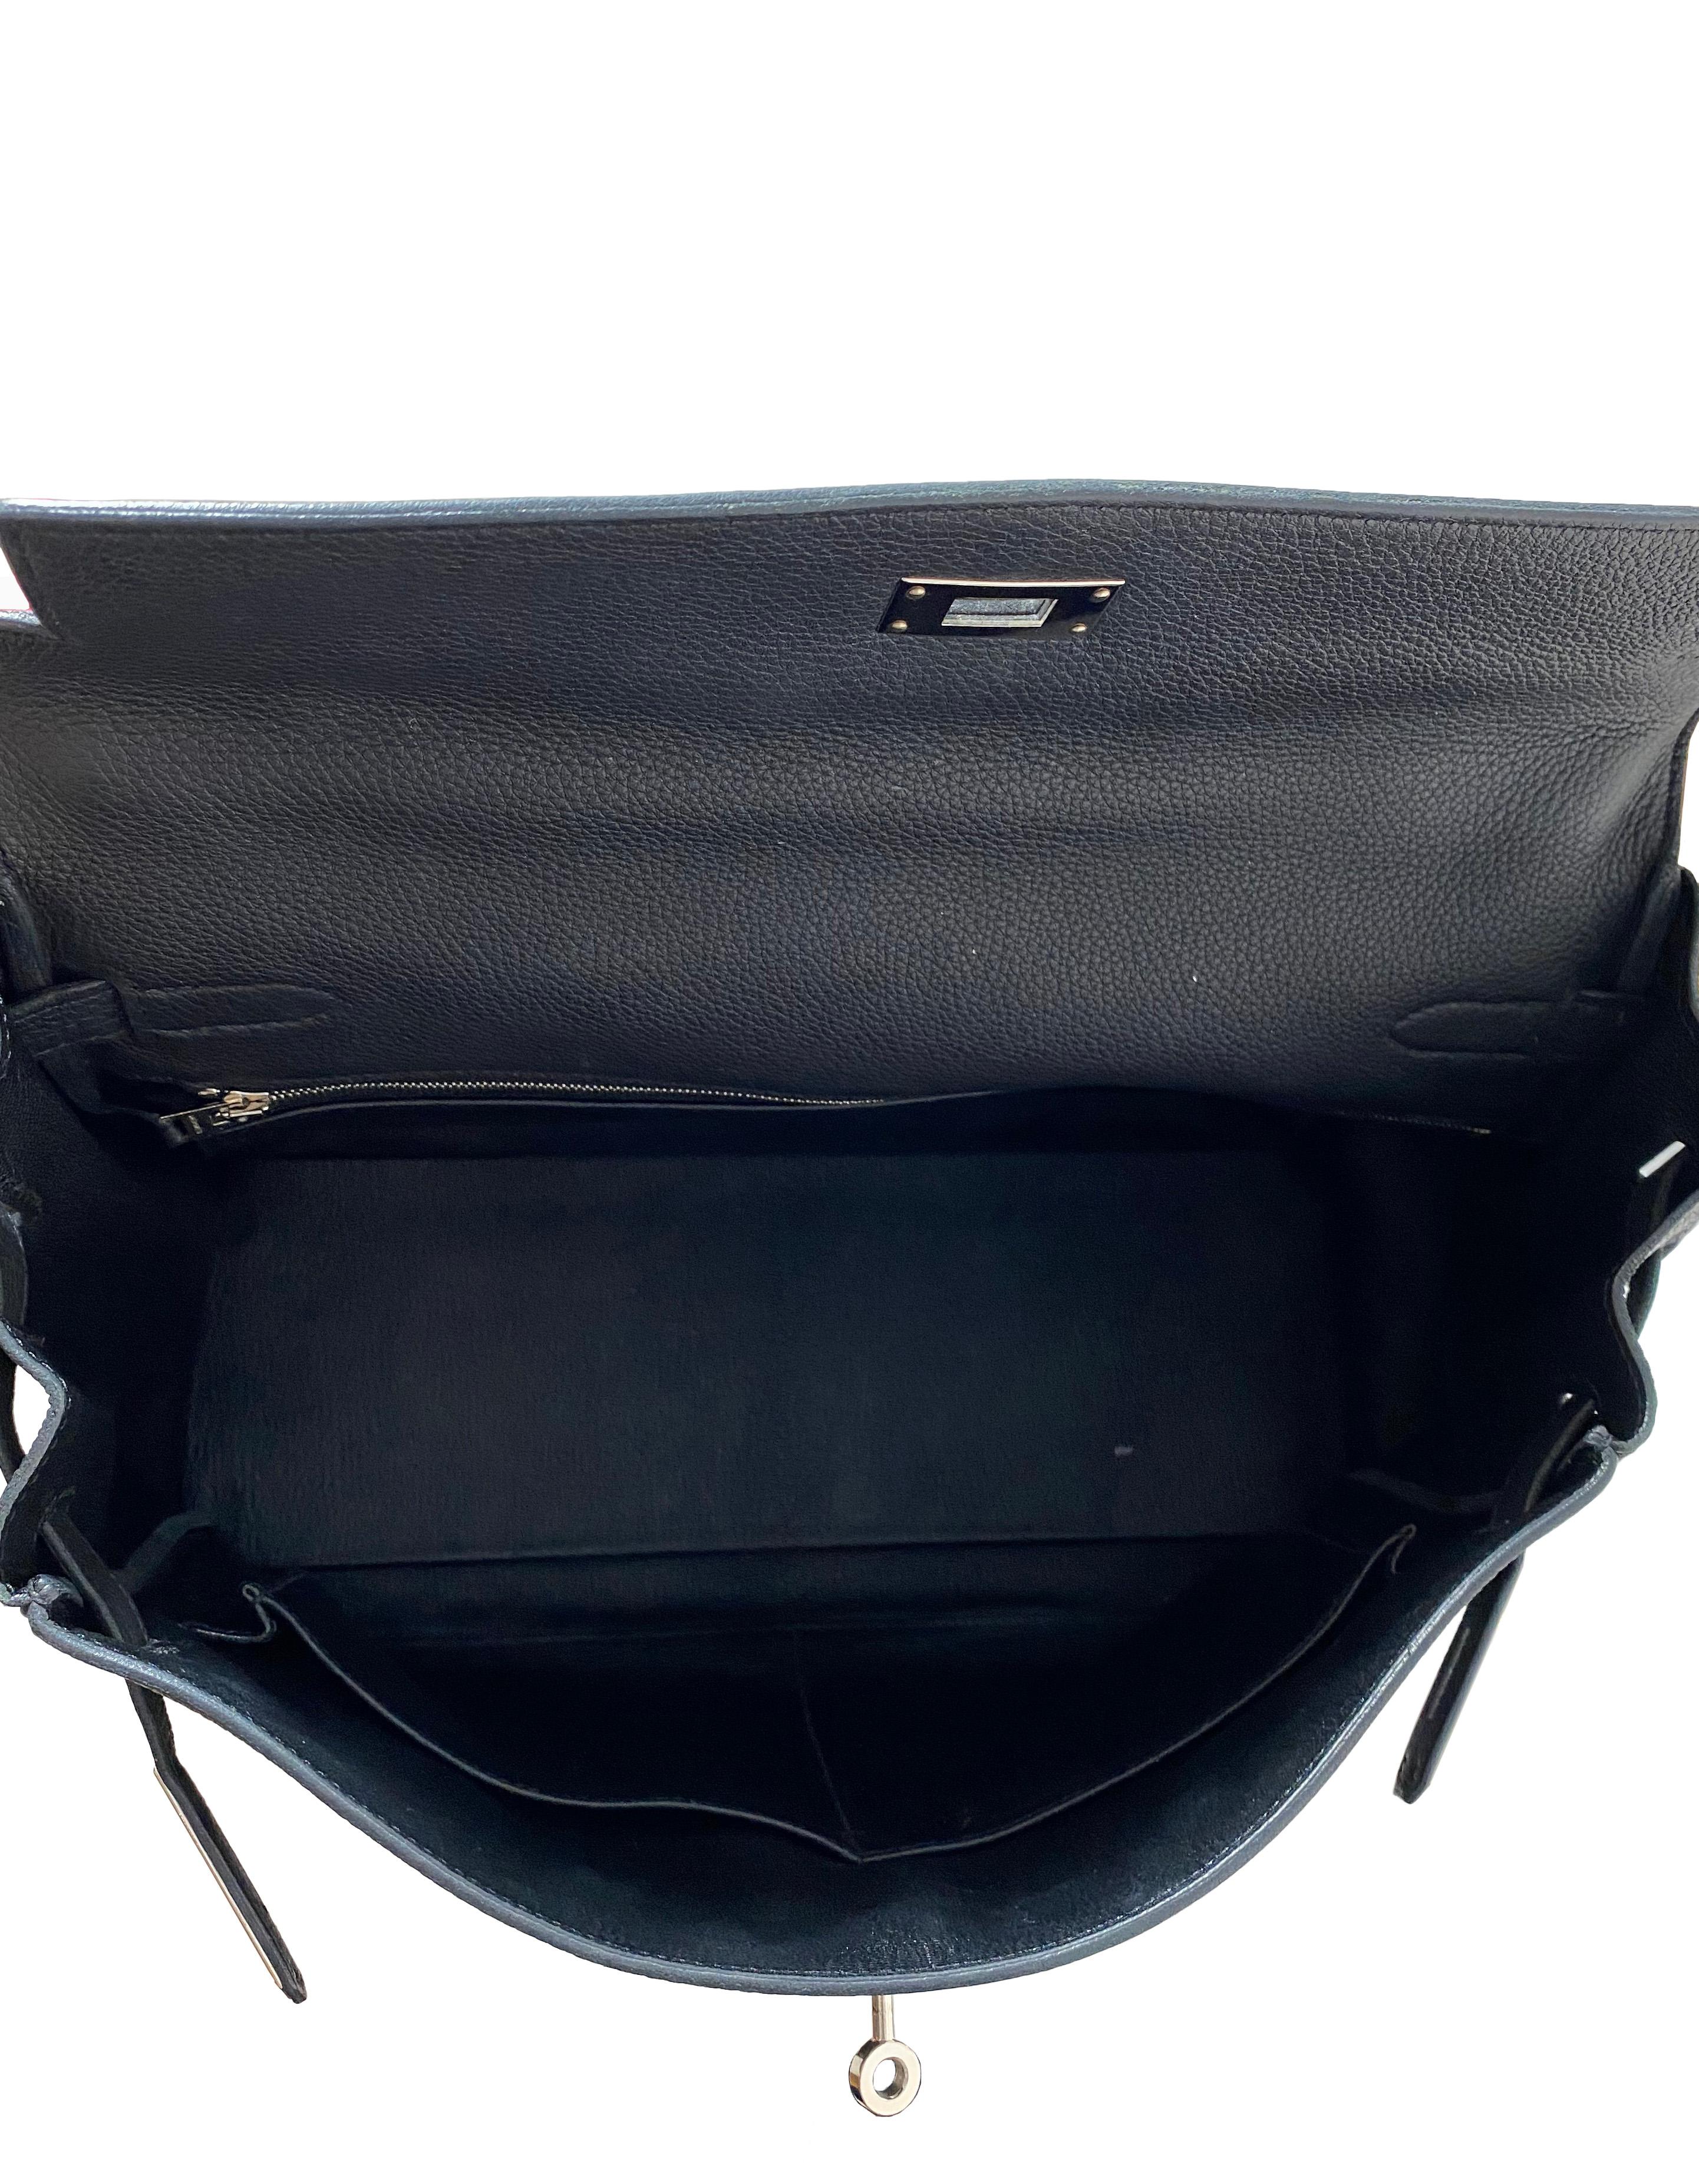 Hermes 35cm Black Togo Leather Kelly Bag w/ Palladium Hardware BOX/DUST BAG 4